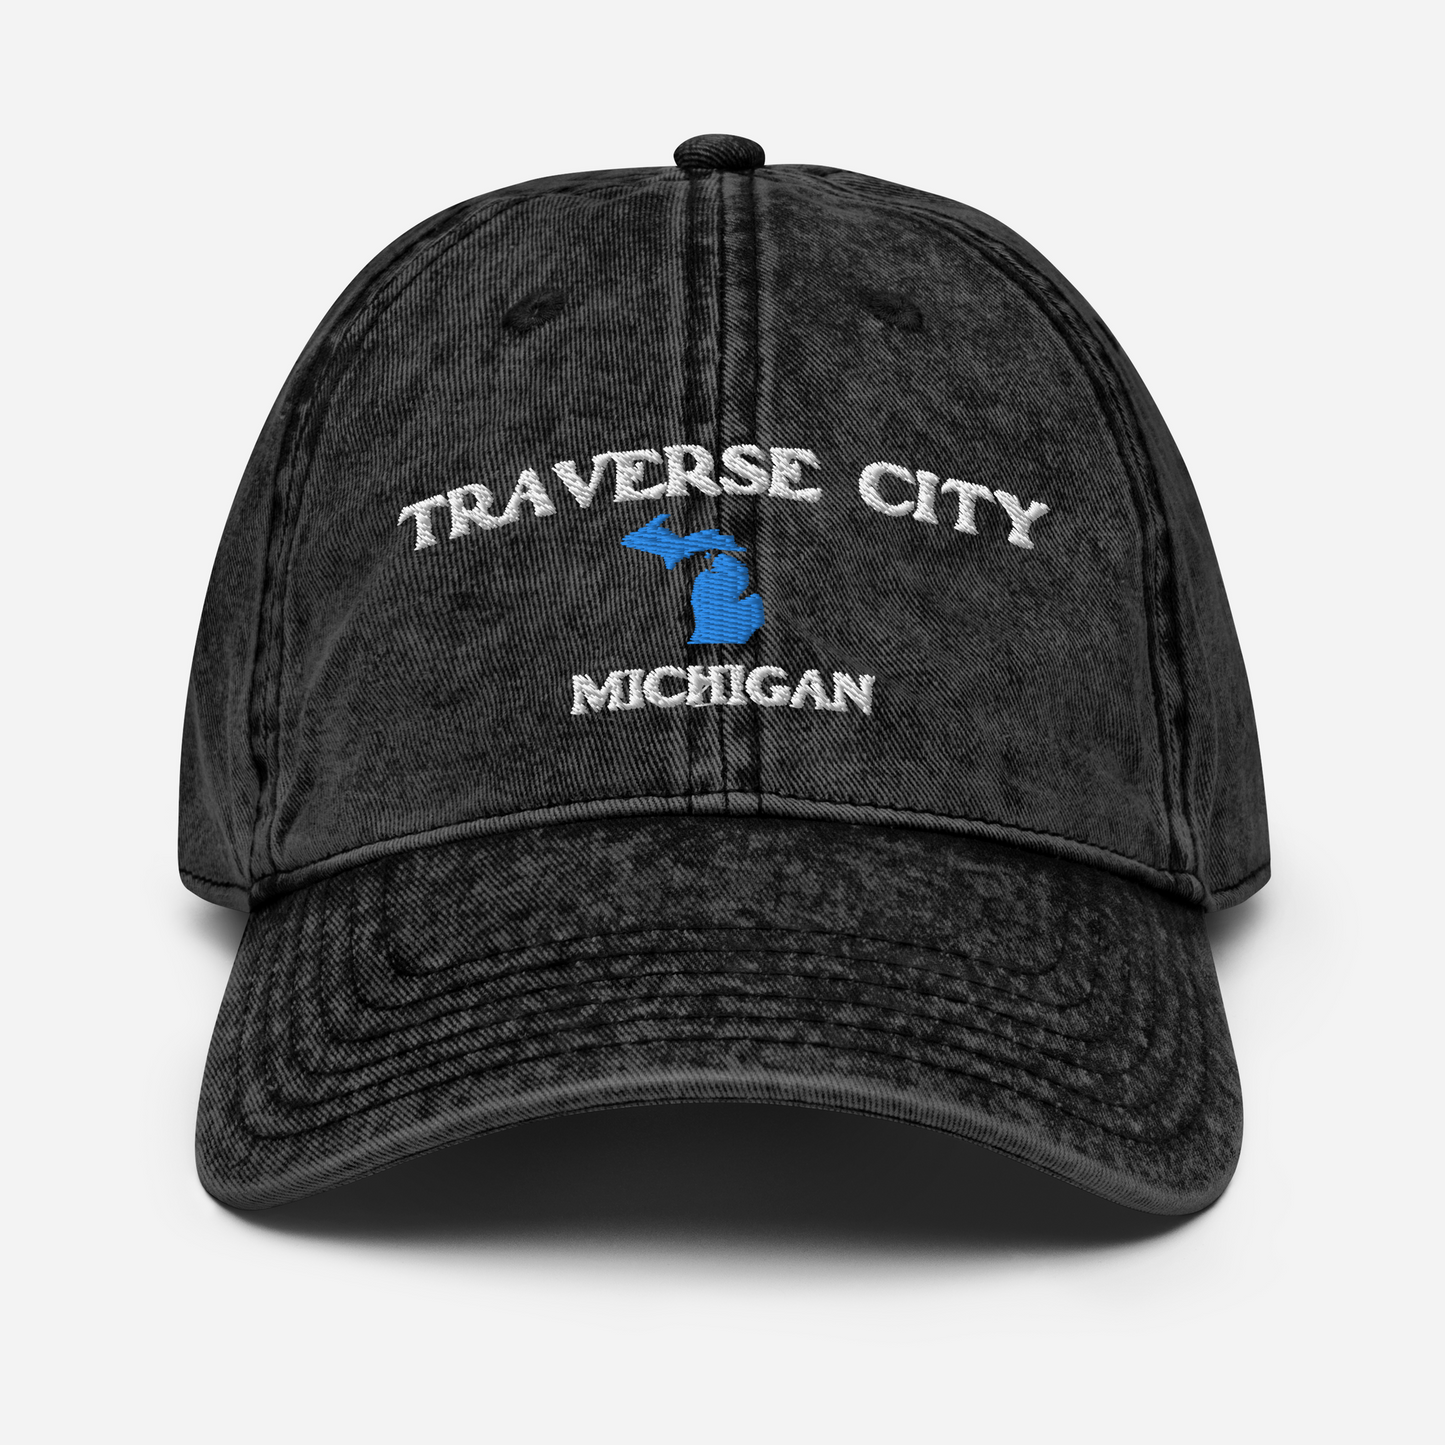 'Traverse City Michigan' Vintage Baseball Cap (w/ Michigan Outline)